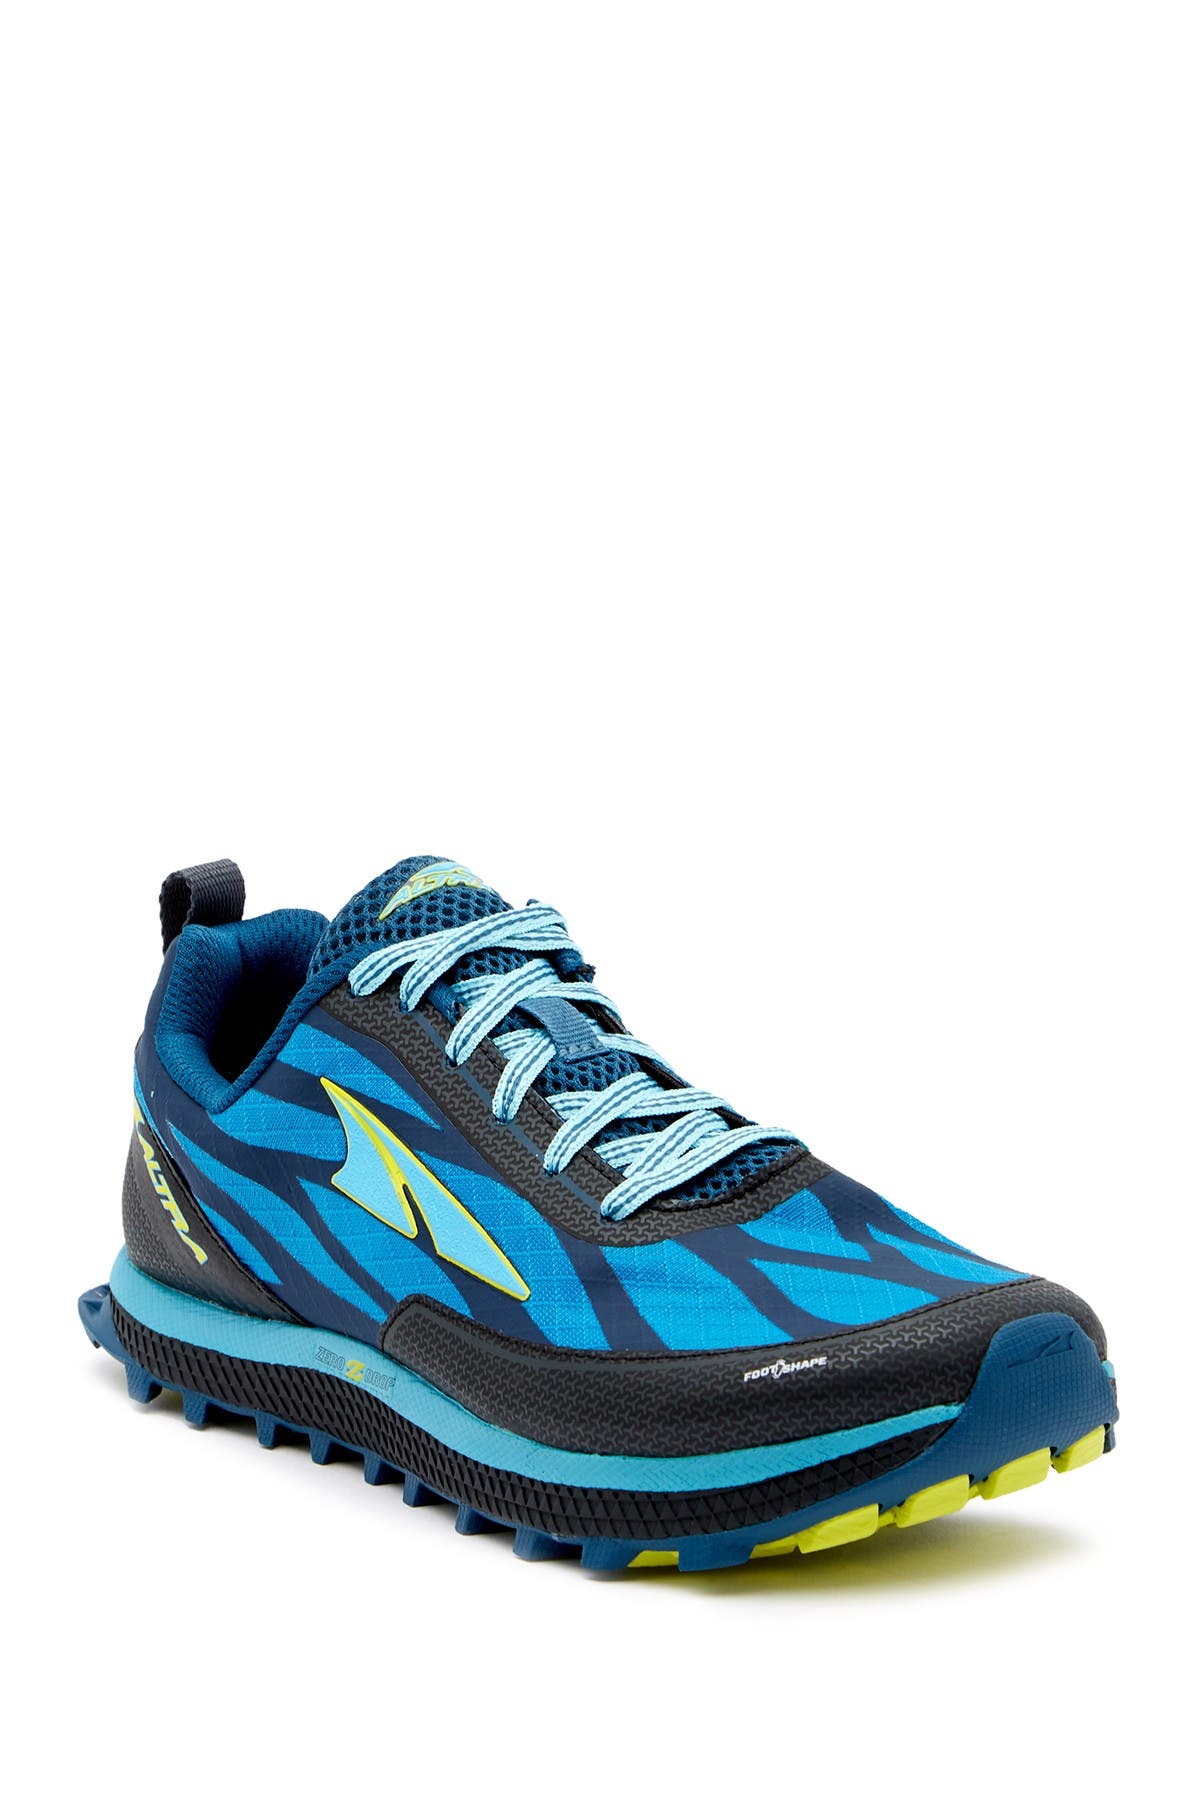 ALTRA | Superior 3.0 Trail Running Shoe 